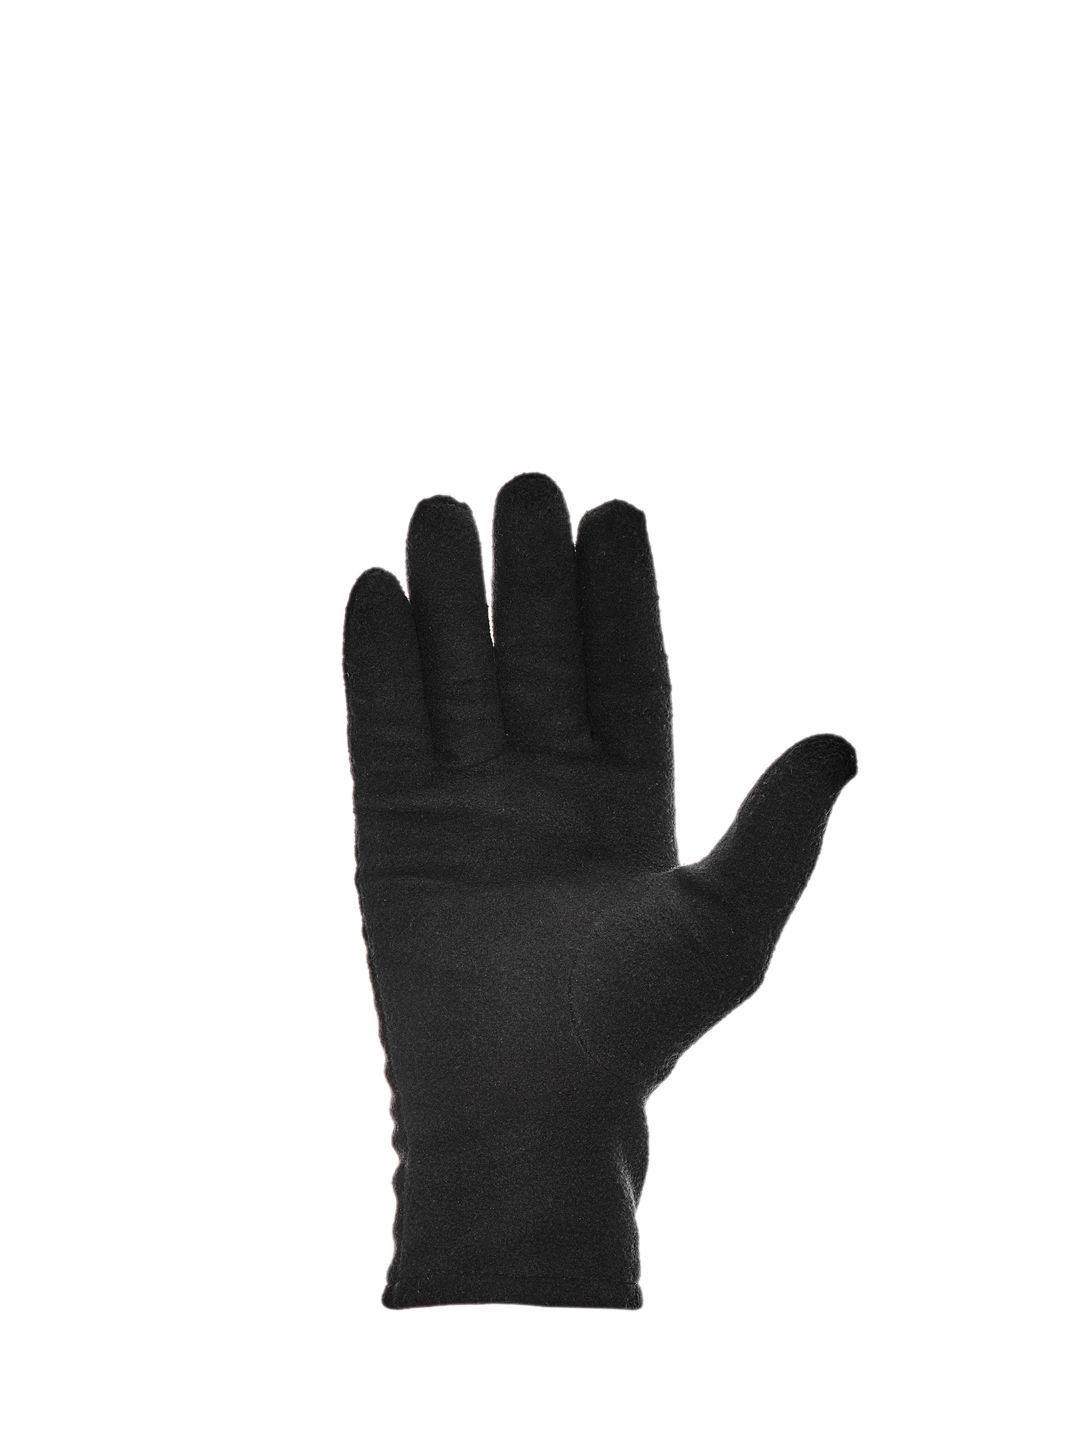 FORCLAZ By Decathlon Unisex Black Mountain Trekking Liner Gloves TREK 100 Price in India